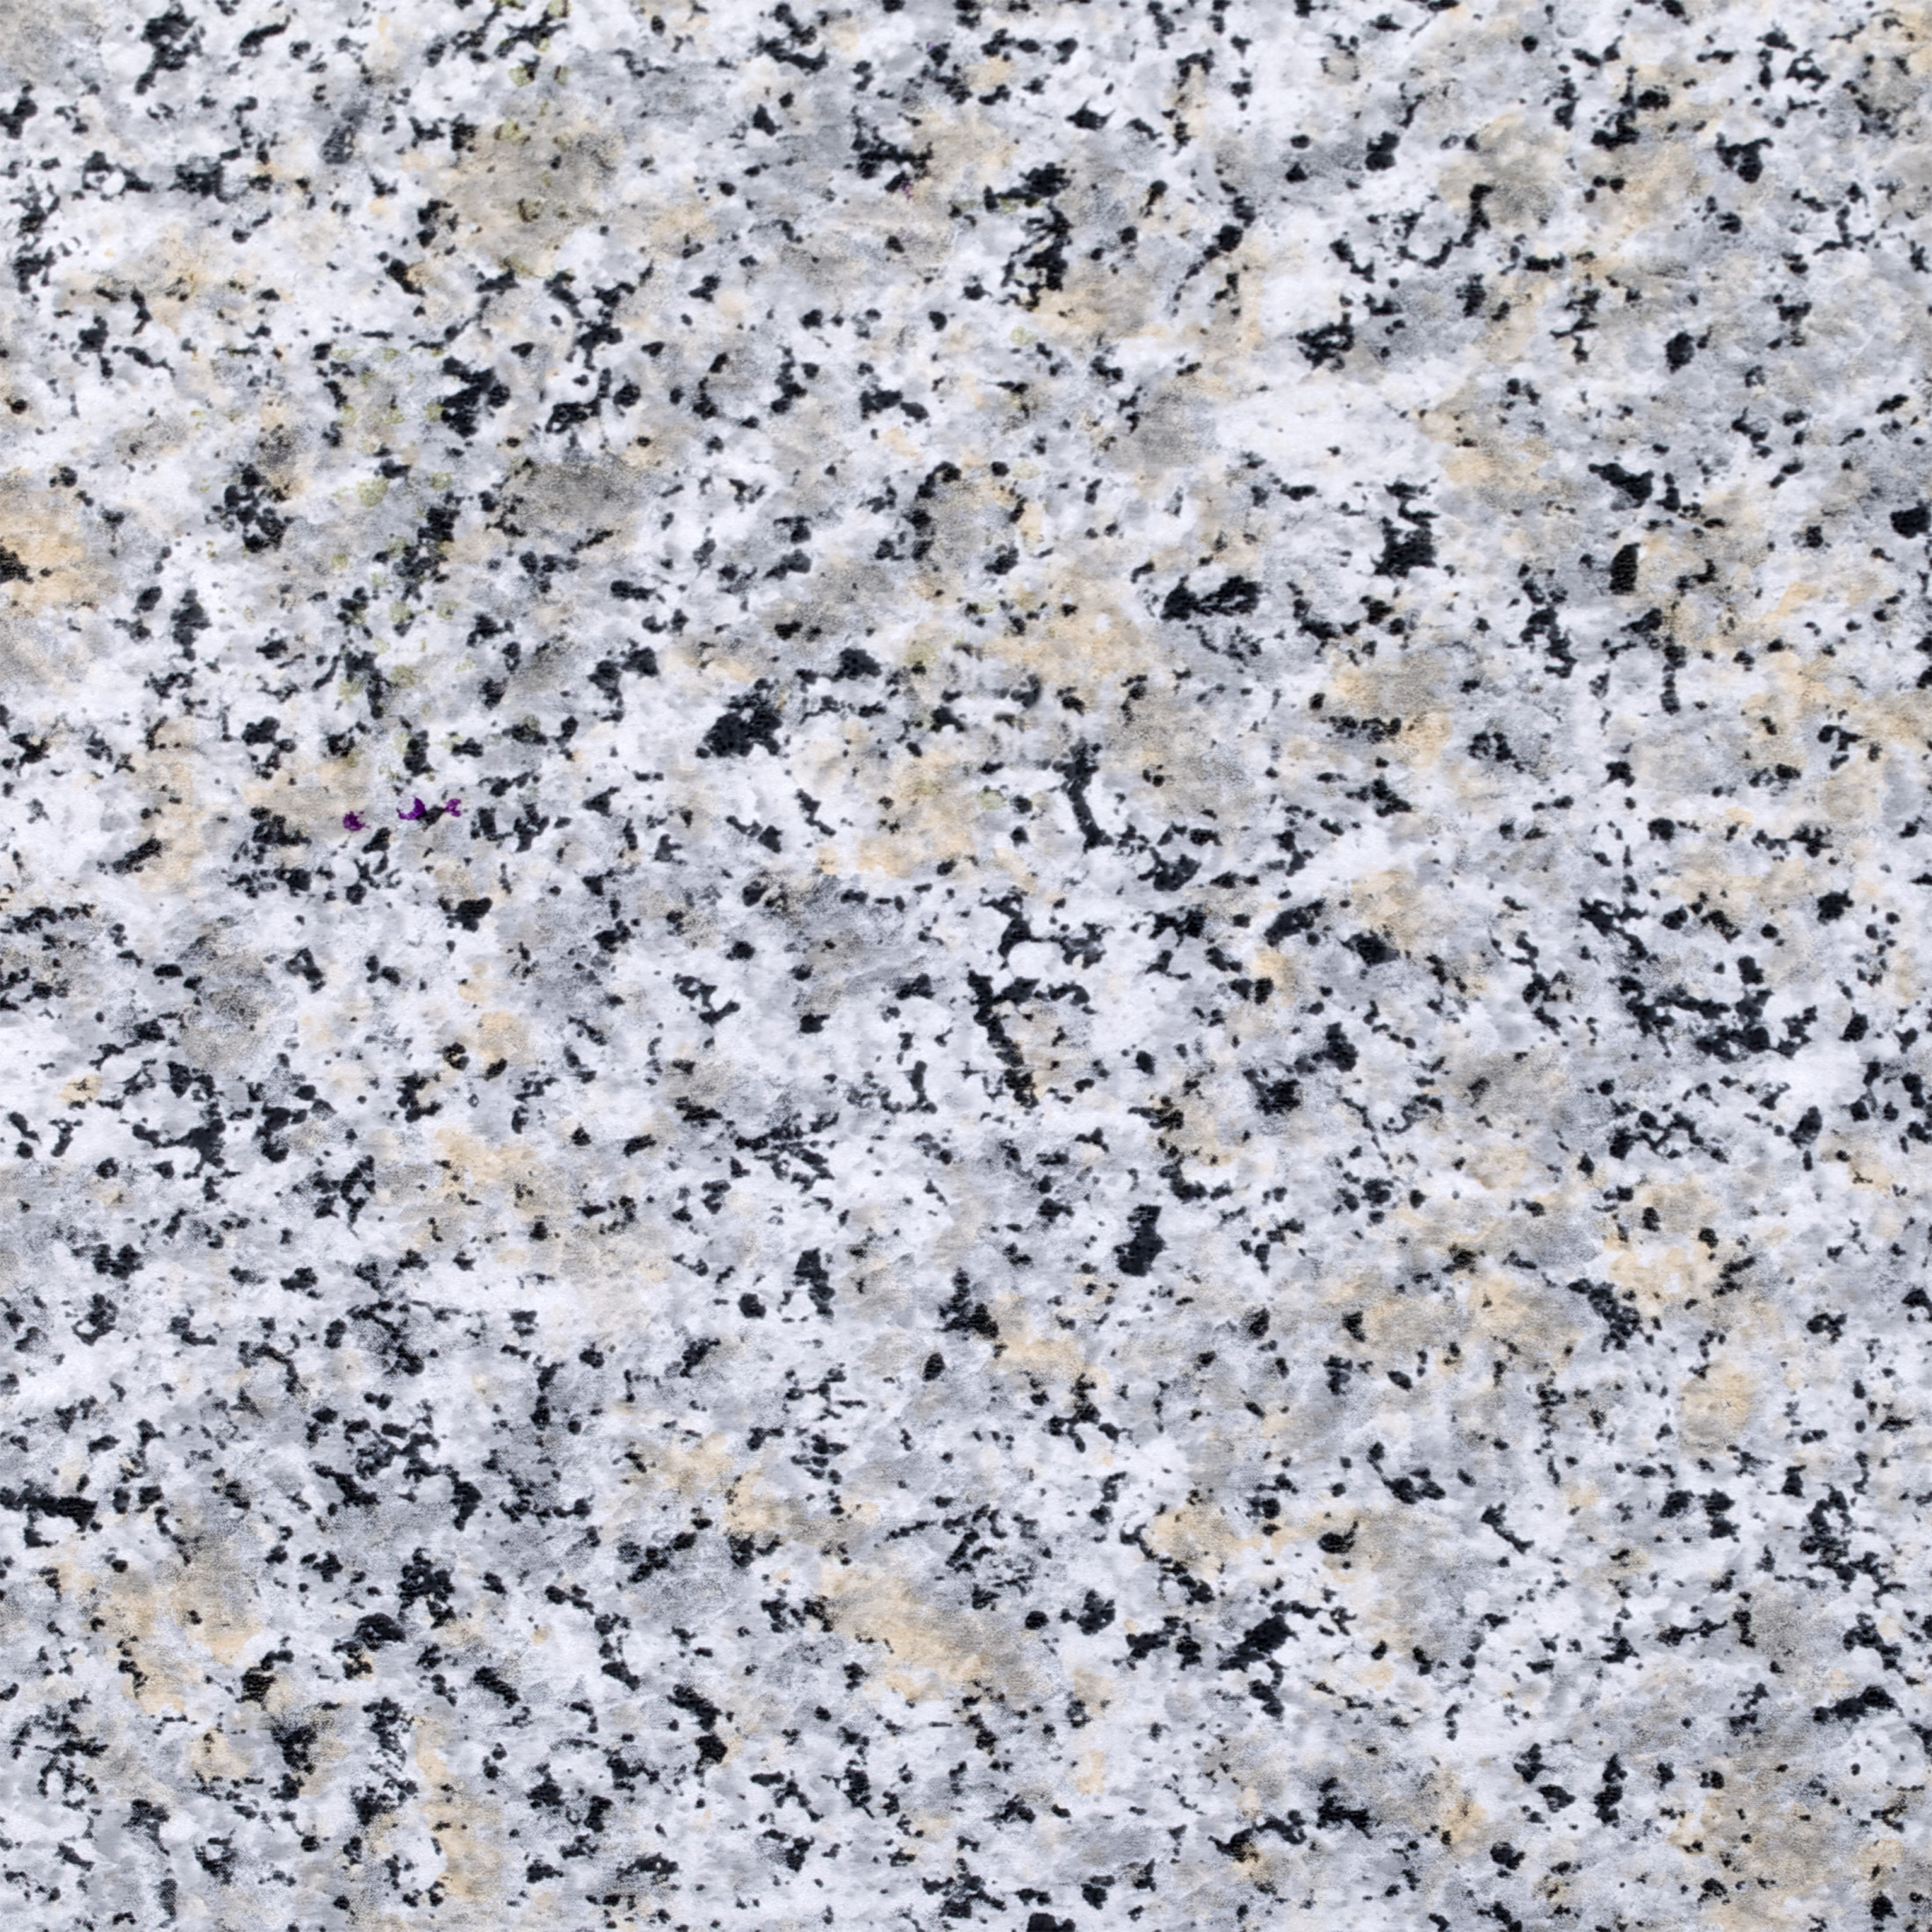 EasyLiner Smooth Top Shelf Liner, Gray Granite, 20 in. x 6 ft.Roll - image 5 of 11